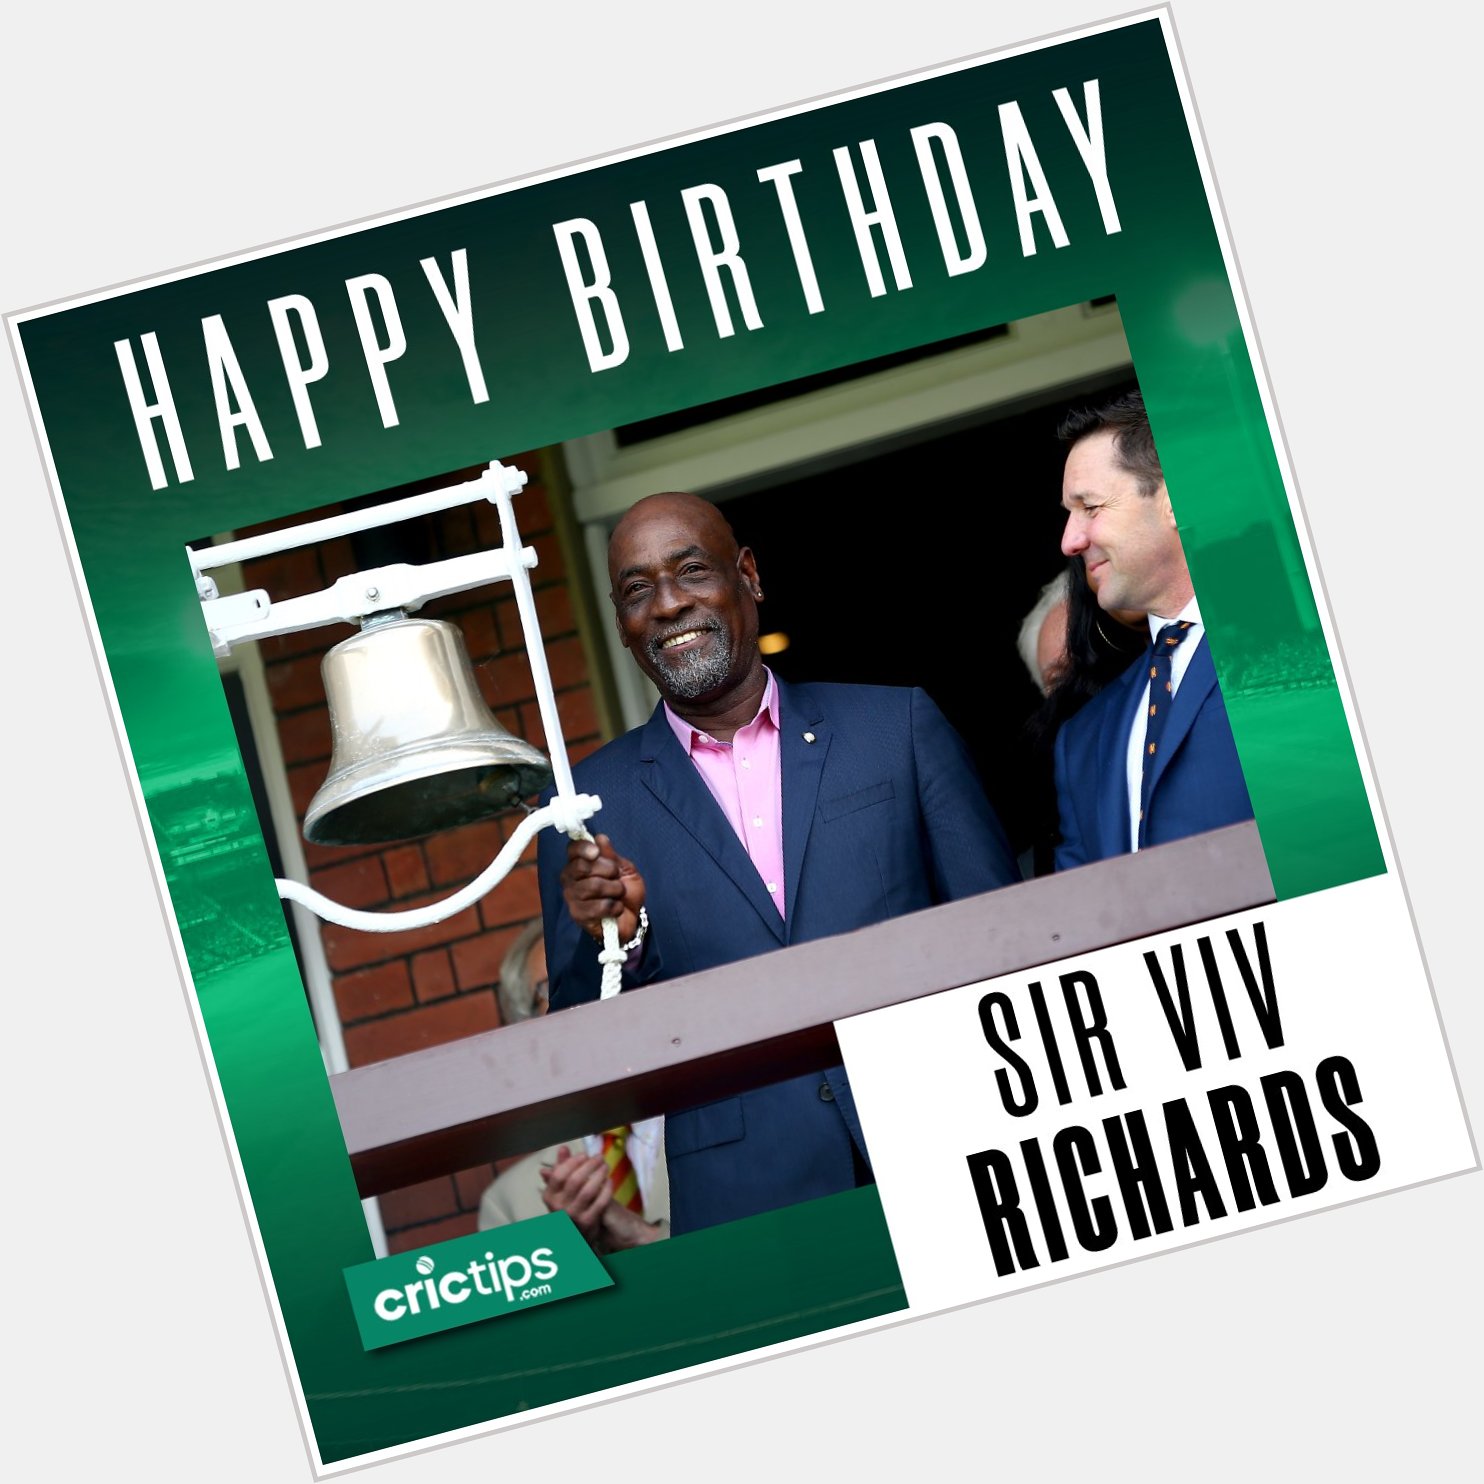 Wishing sir Viv Richards a very happy birthday.    